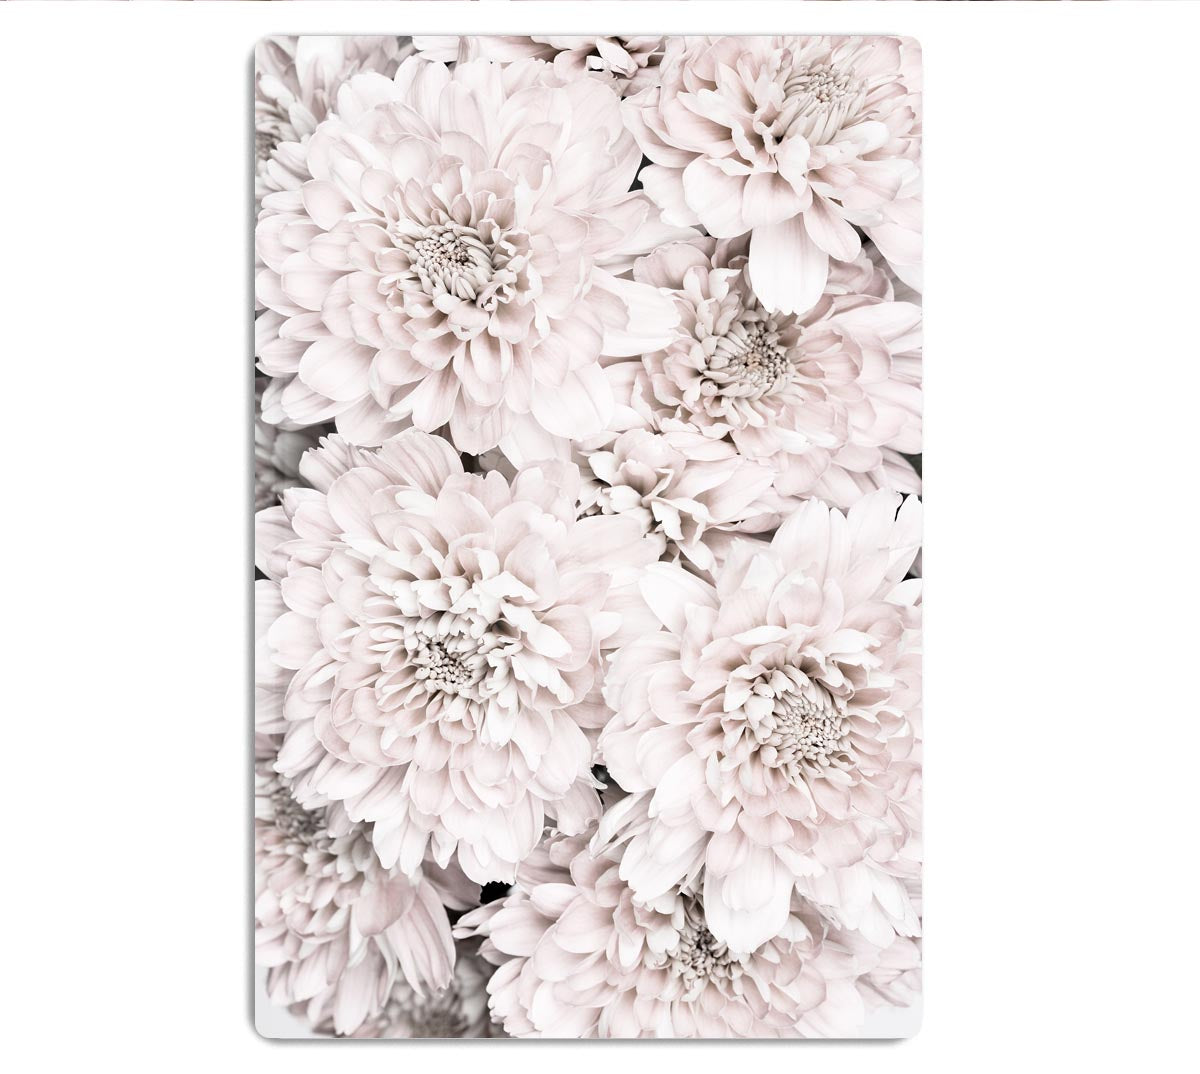 Chrysanthemum No 09 HD Metal Print - Canvas Art Rocks - 1